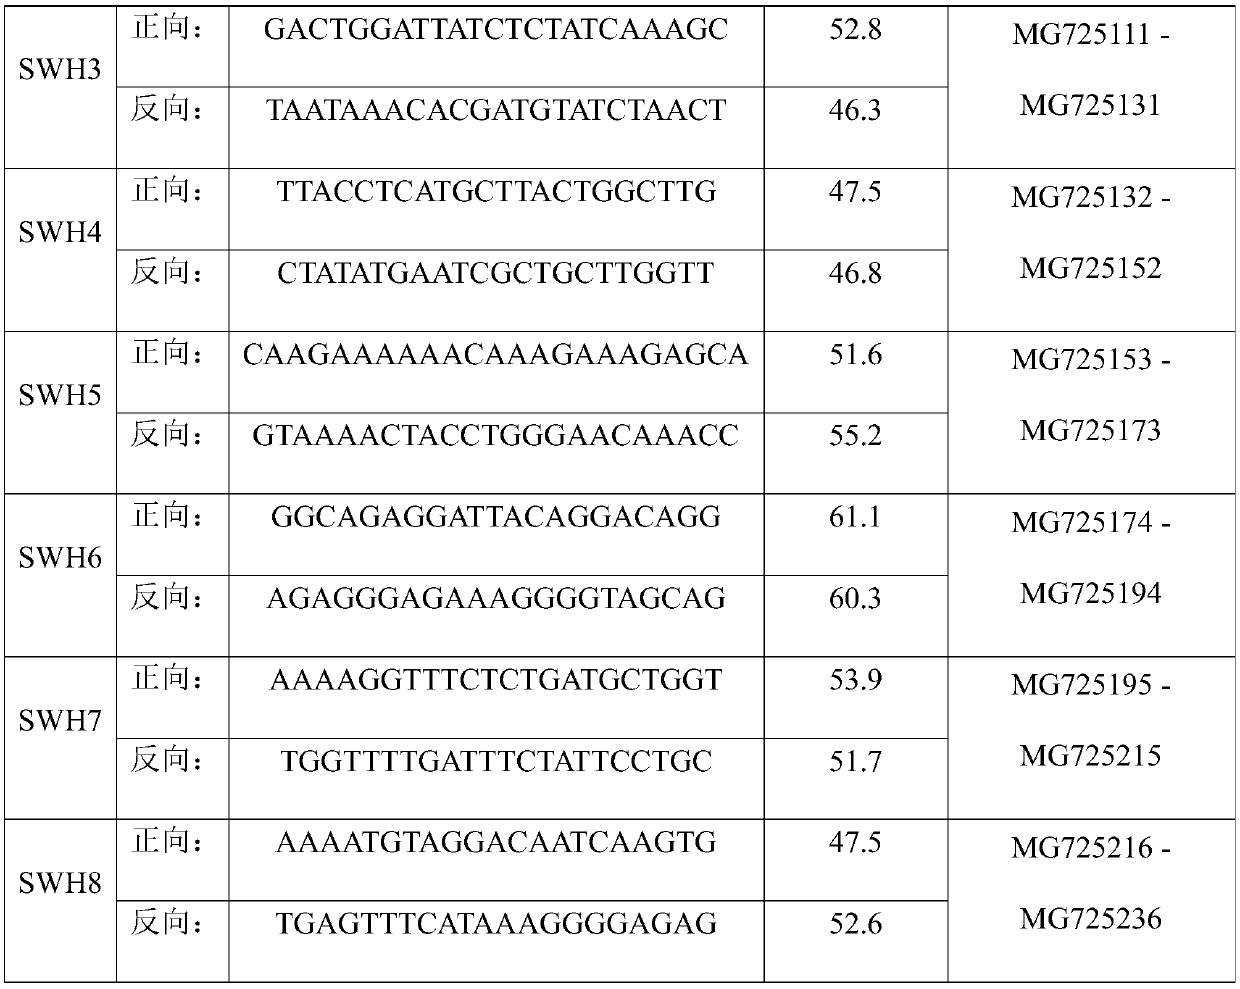 Amplification primers for identification of olea europaea l. varieties based on SNP loci, screening method and identification method